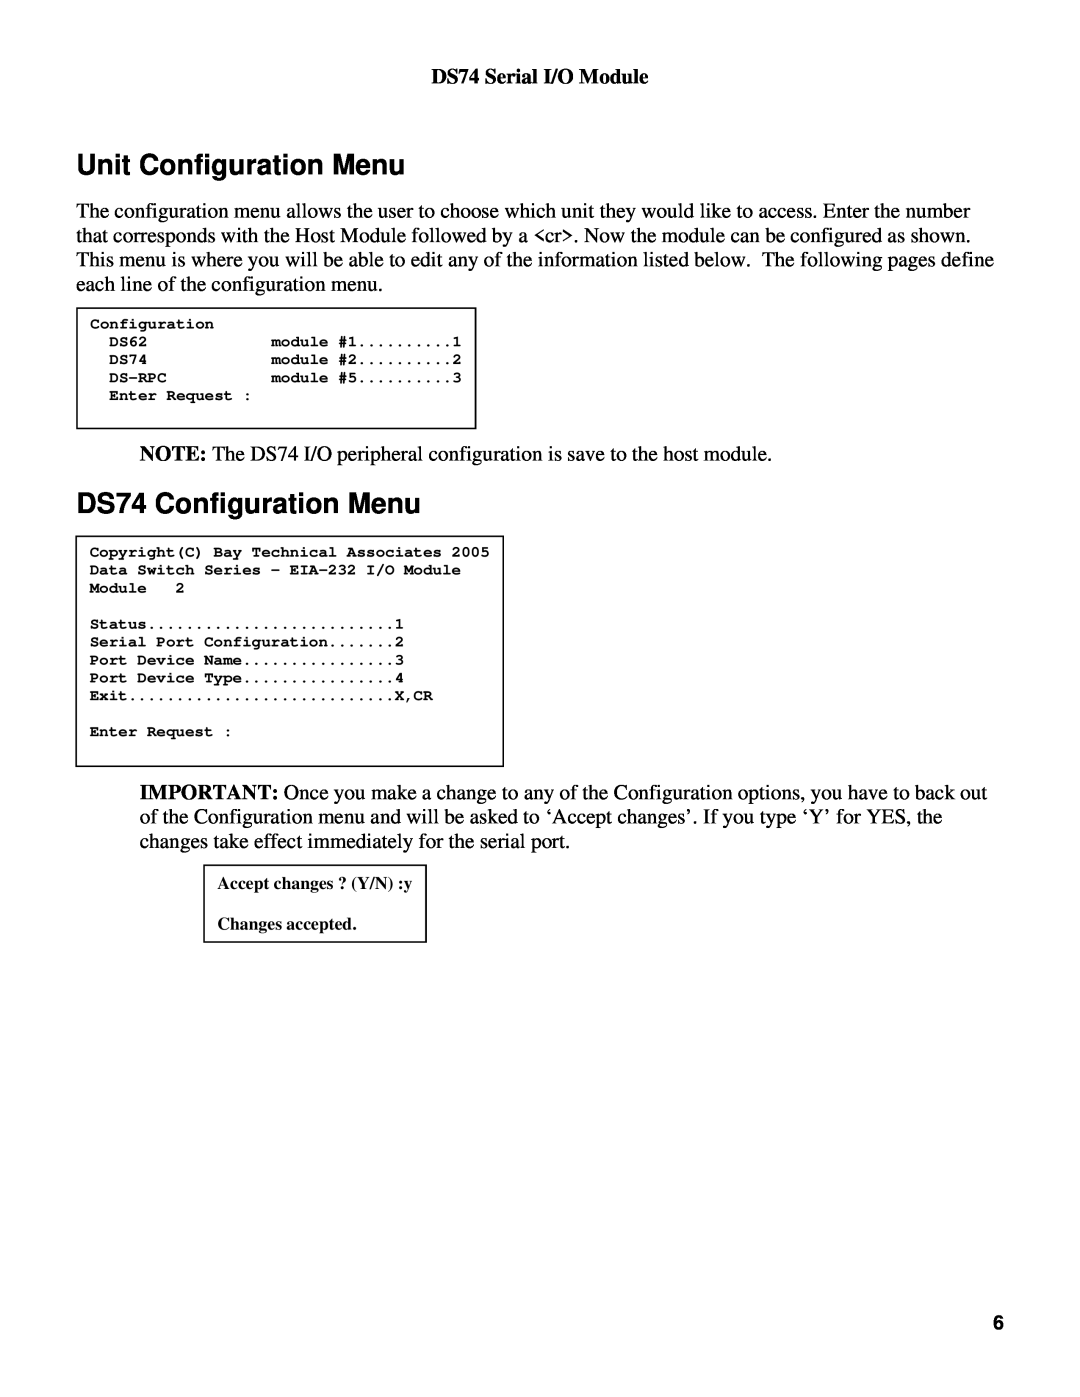 Bay Technical Associates manual Unit Configuration Menu, DS74 Configuration Menu, DS74 Serial I/O Module 